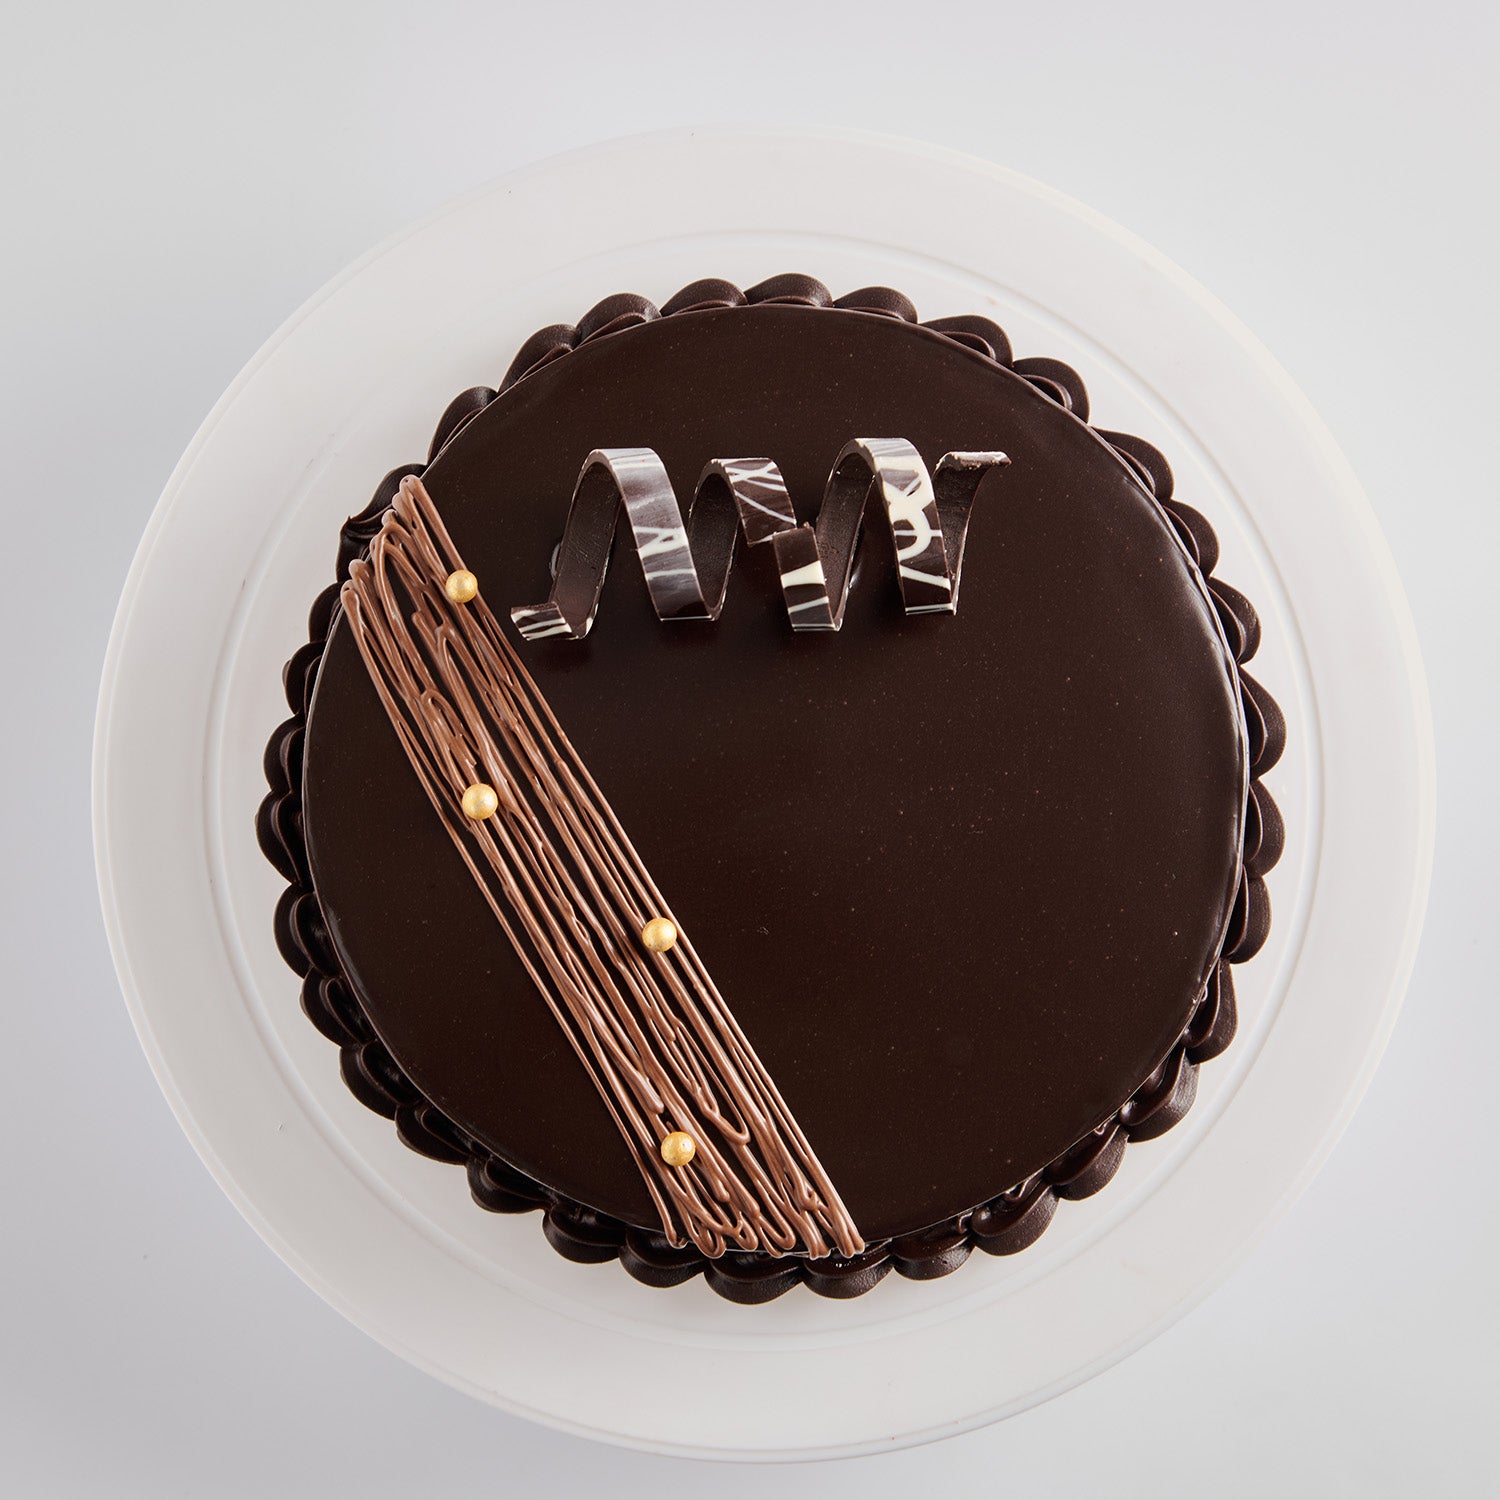 Chocolate Truffle Cream Cake - with a gluten free option.